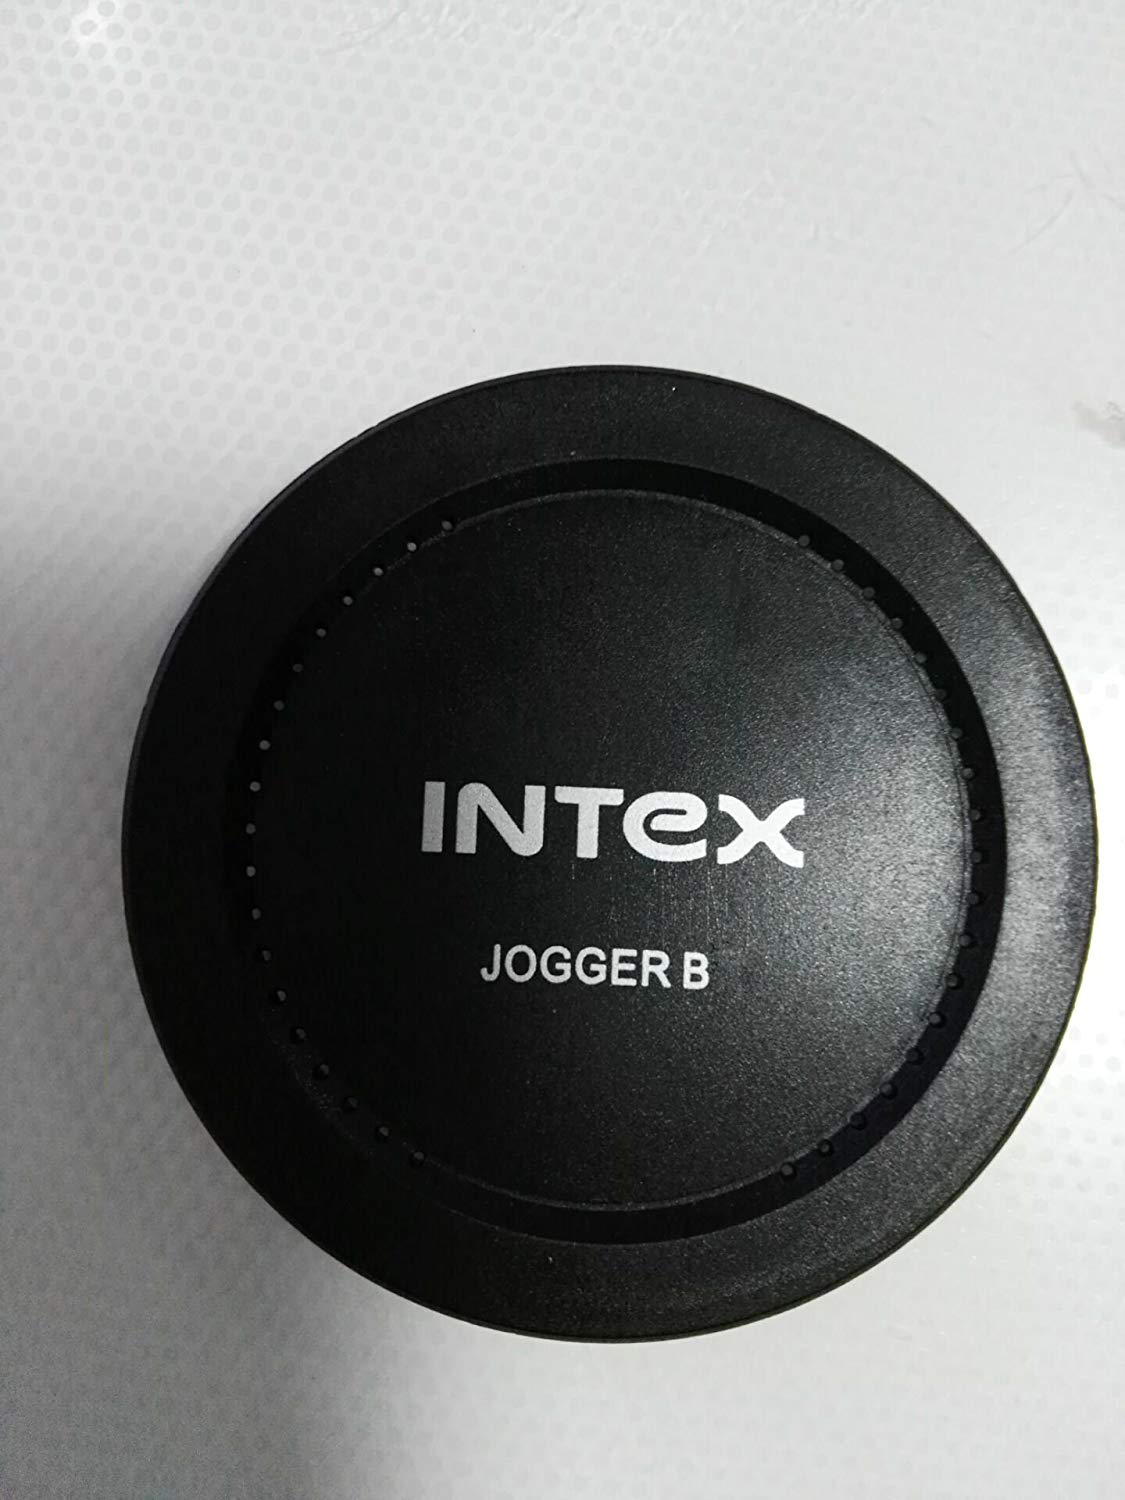 intex jogger b price